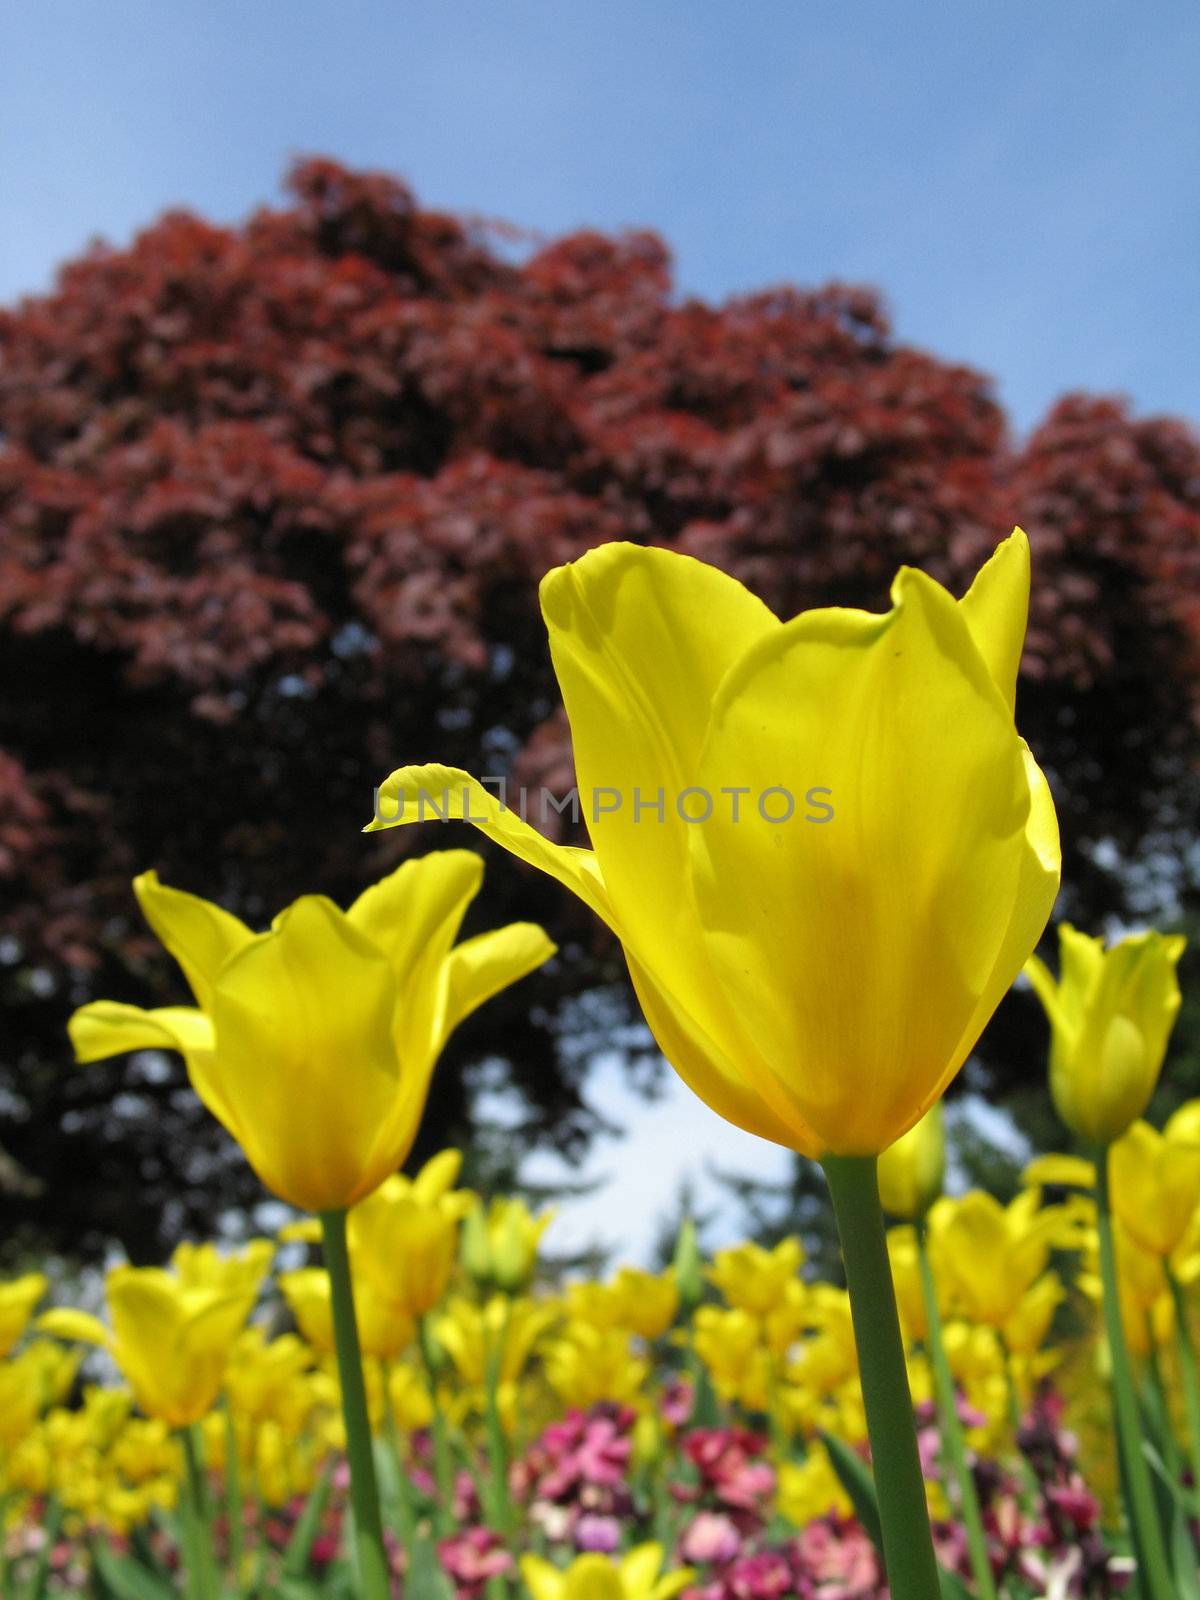 garden of yellow tulips by mmm